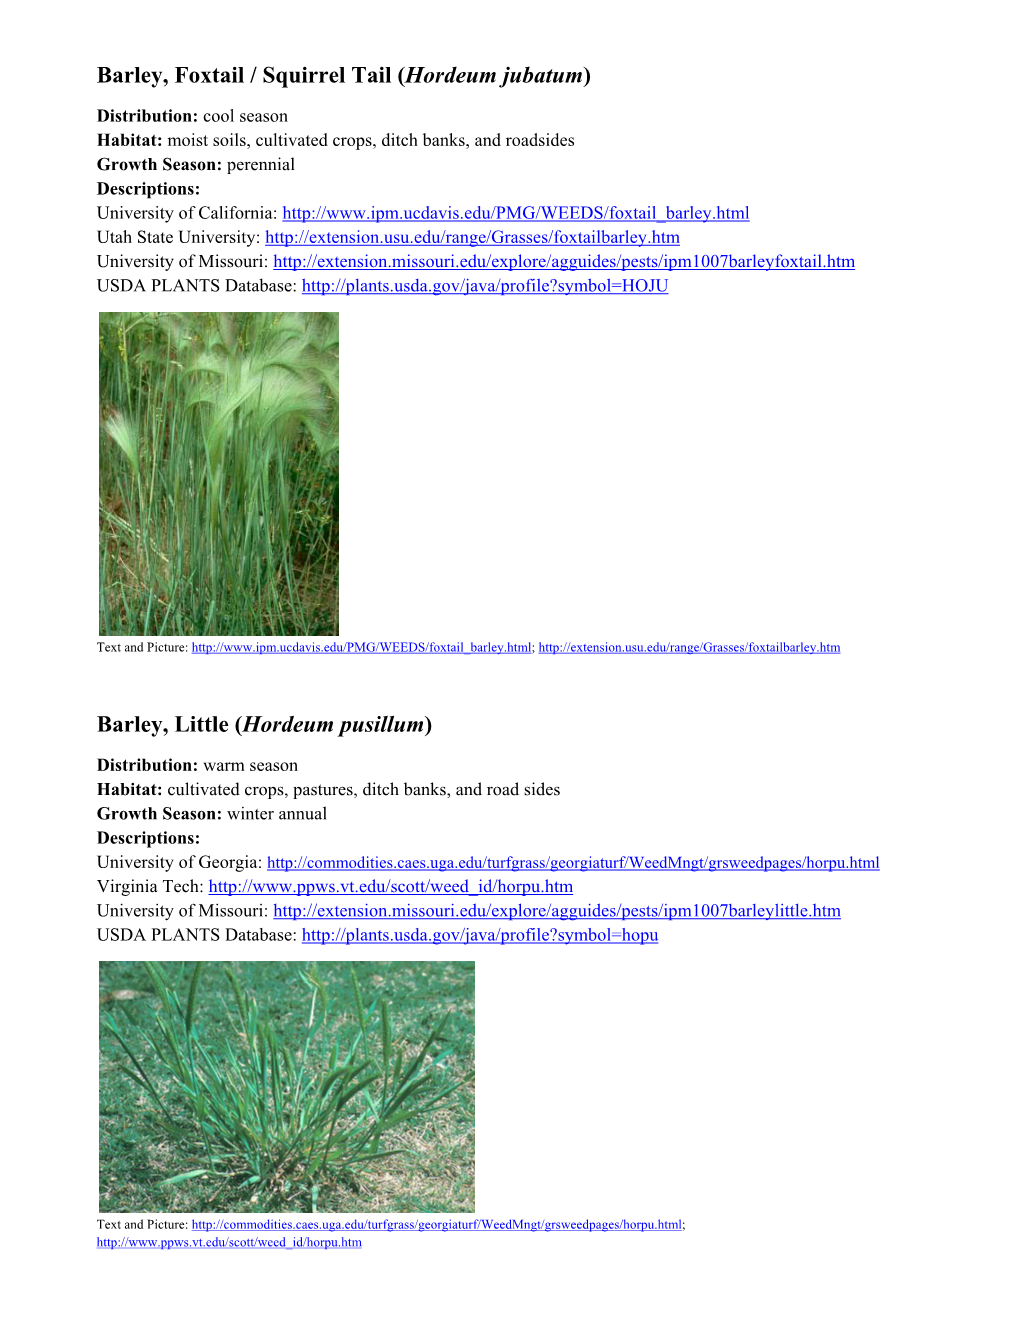 Barley, Little (Hordeum Pusillum)